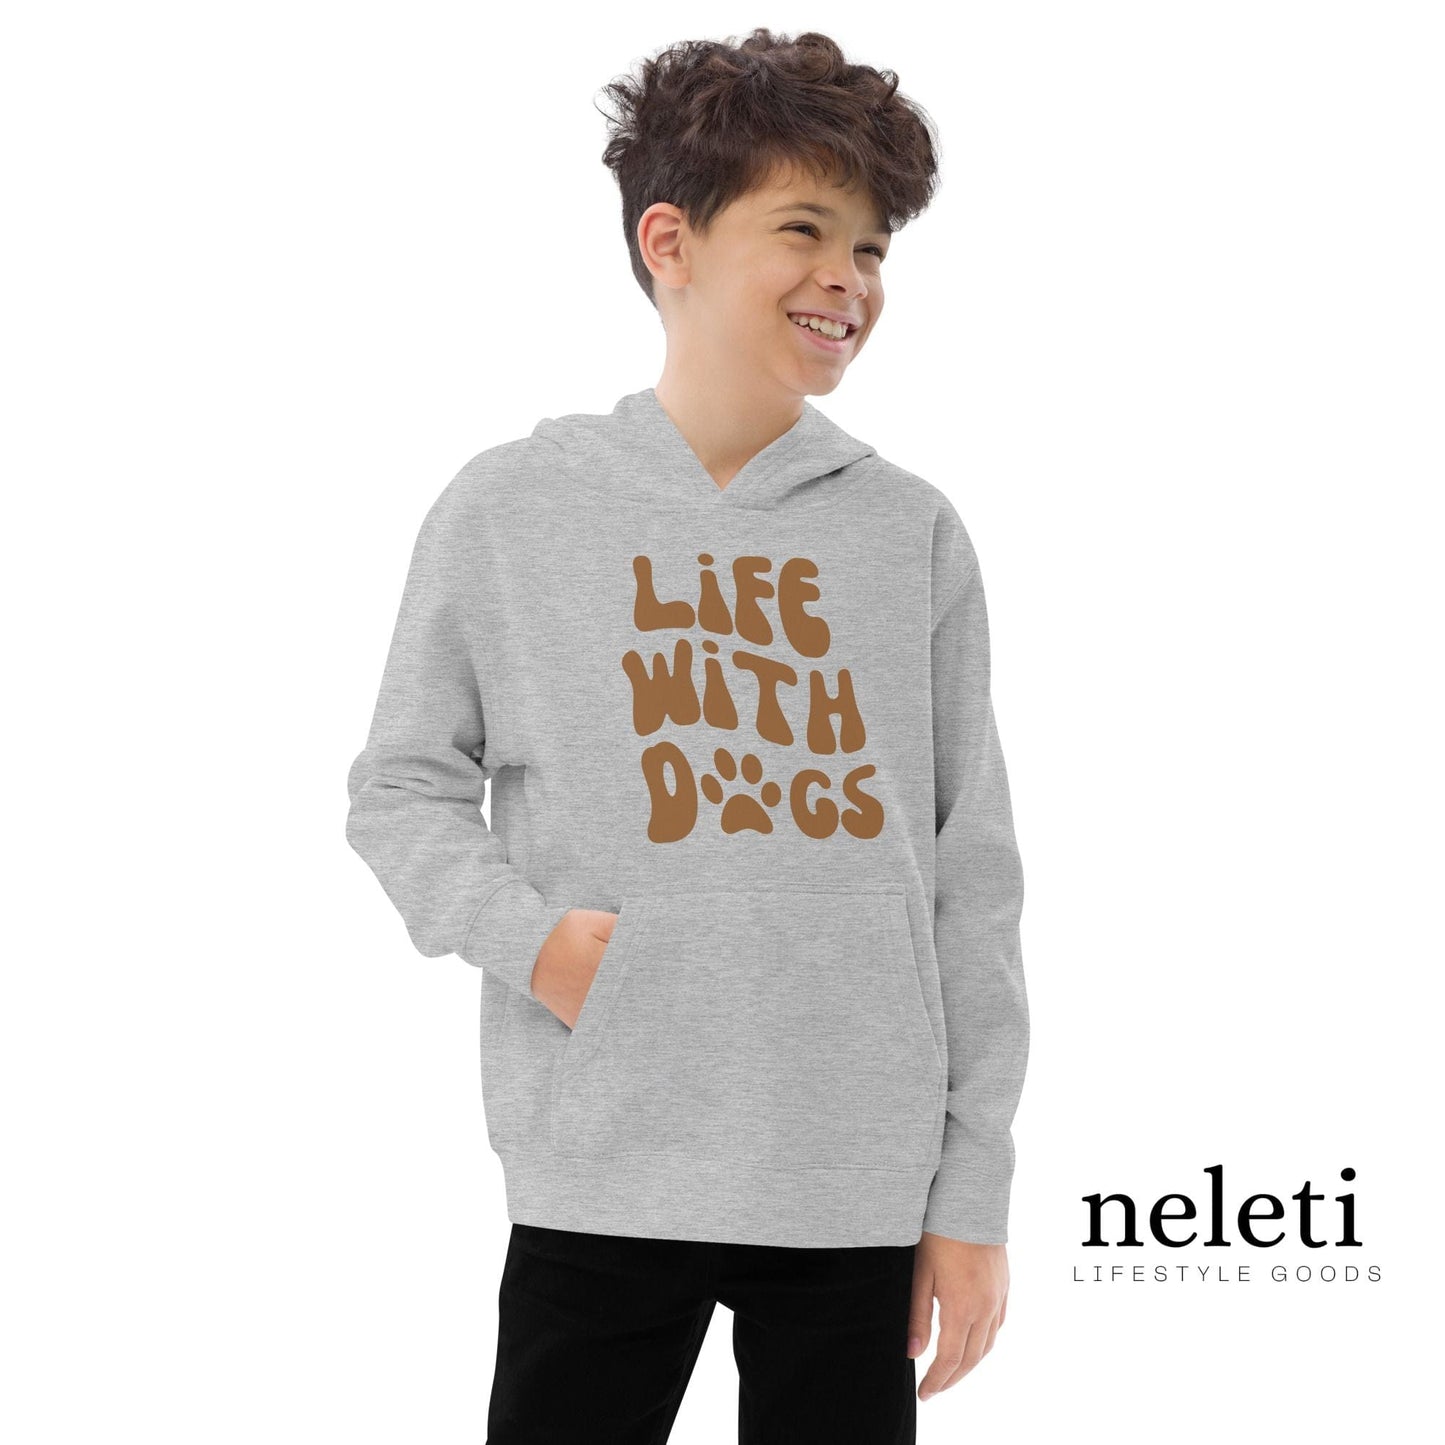 Kids Fleece Hoodie: 'Life With Dogs' Adventure Companion. Exclusively on Neleti.com!